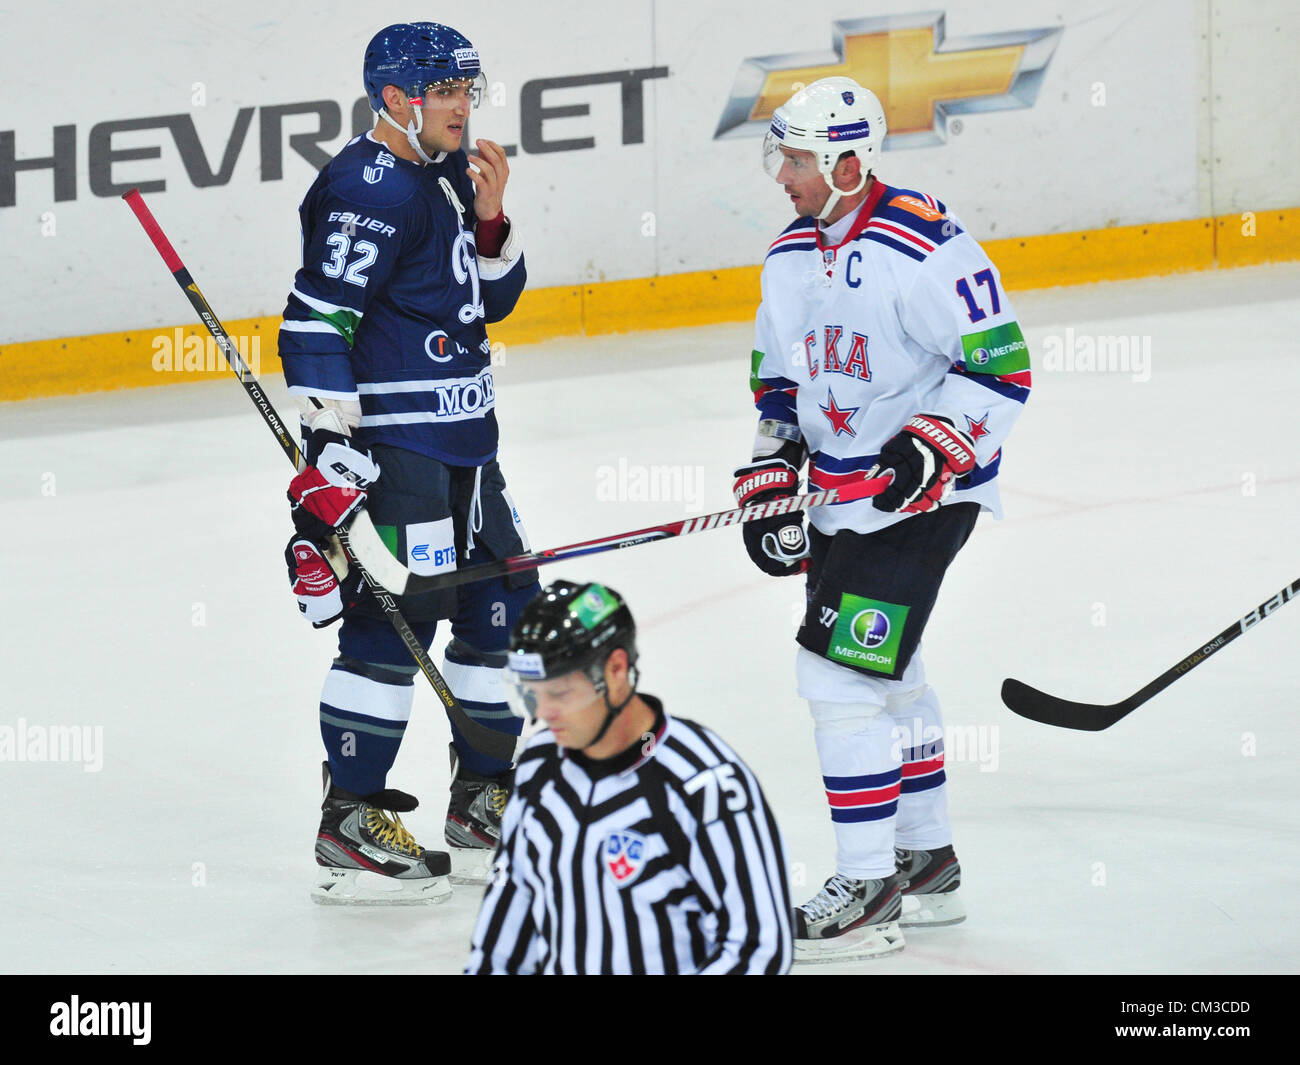 EuroVision: KHL to keep Ovechkin, Kovalchuk?